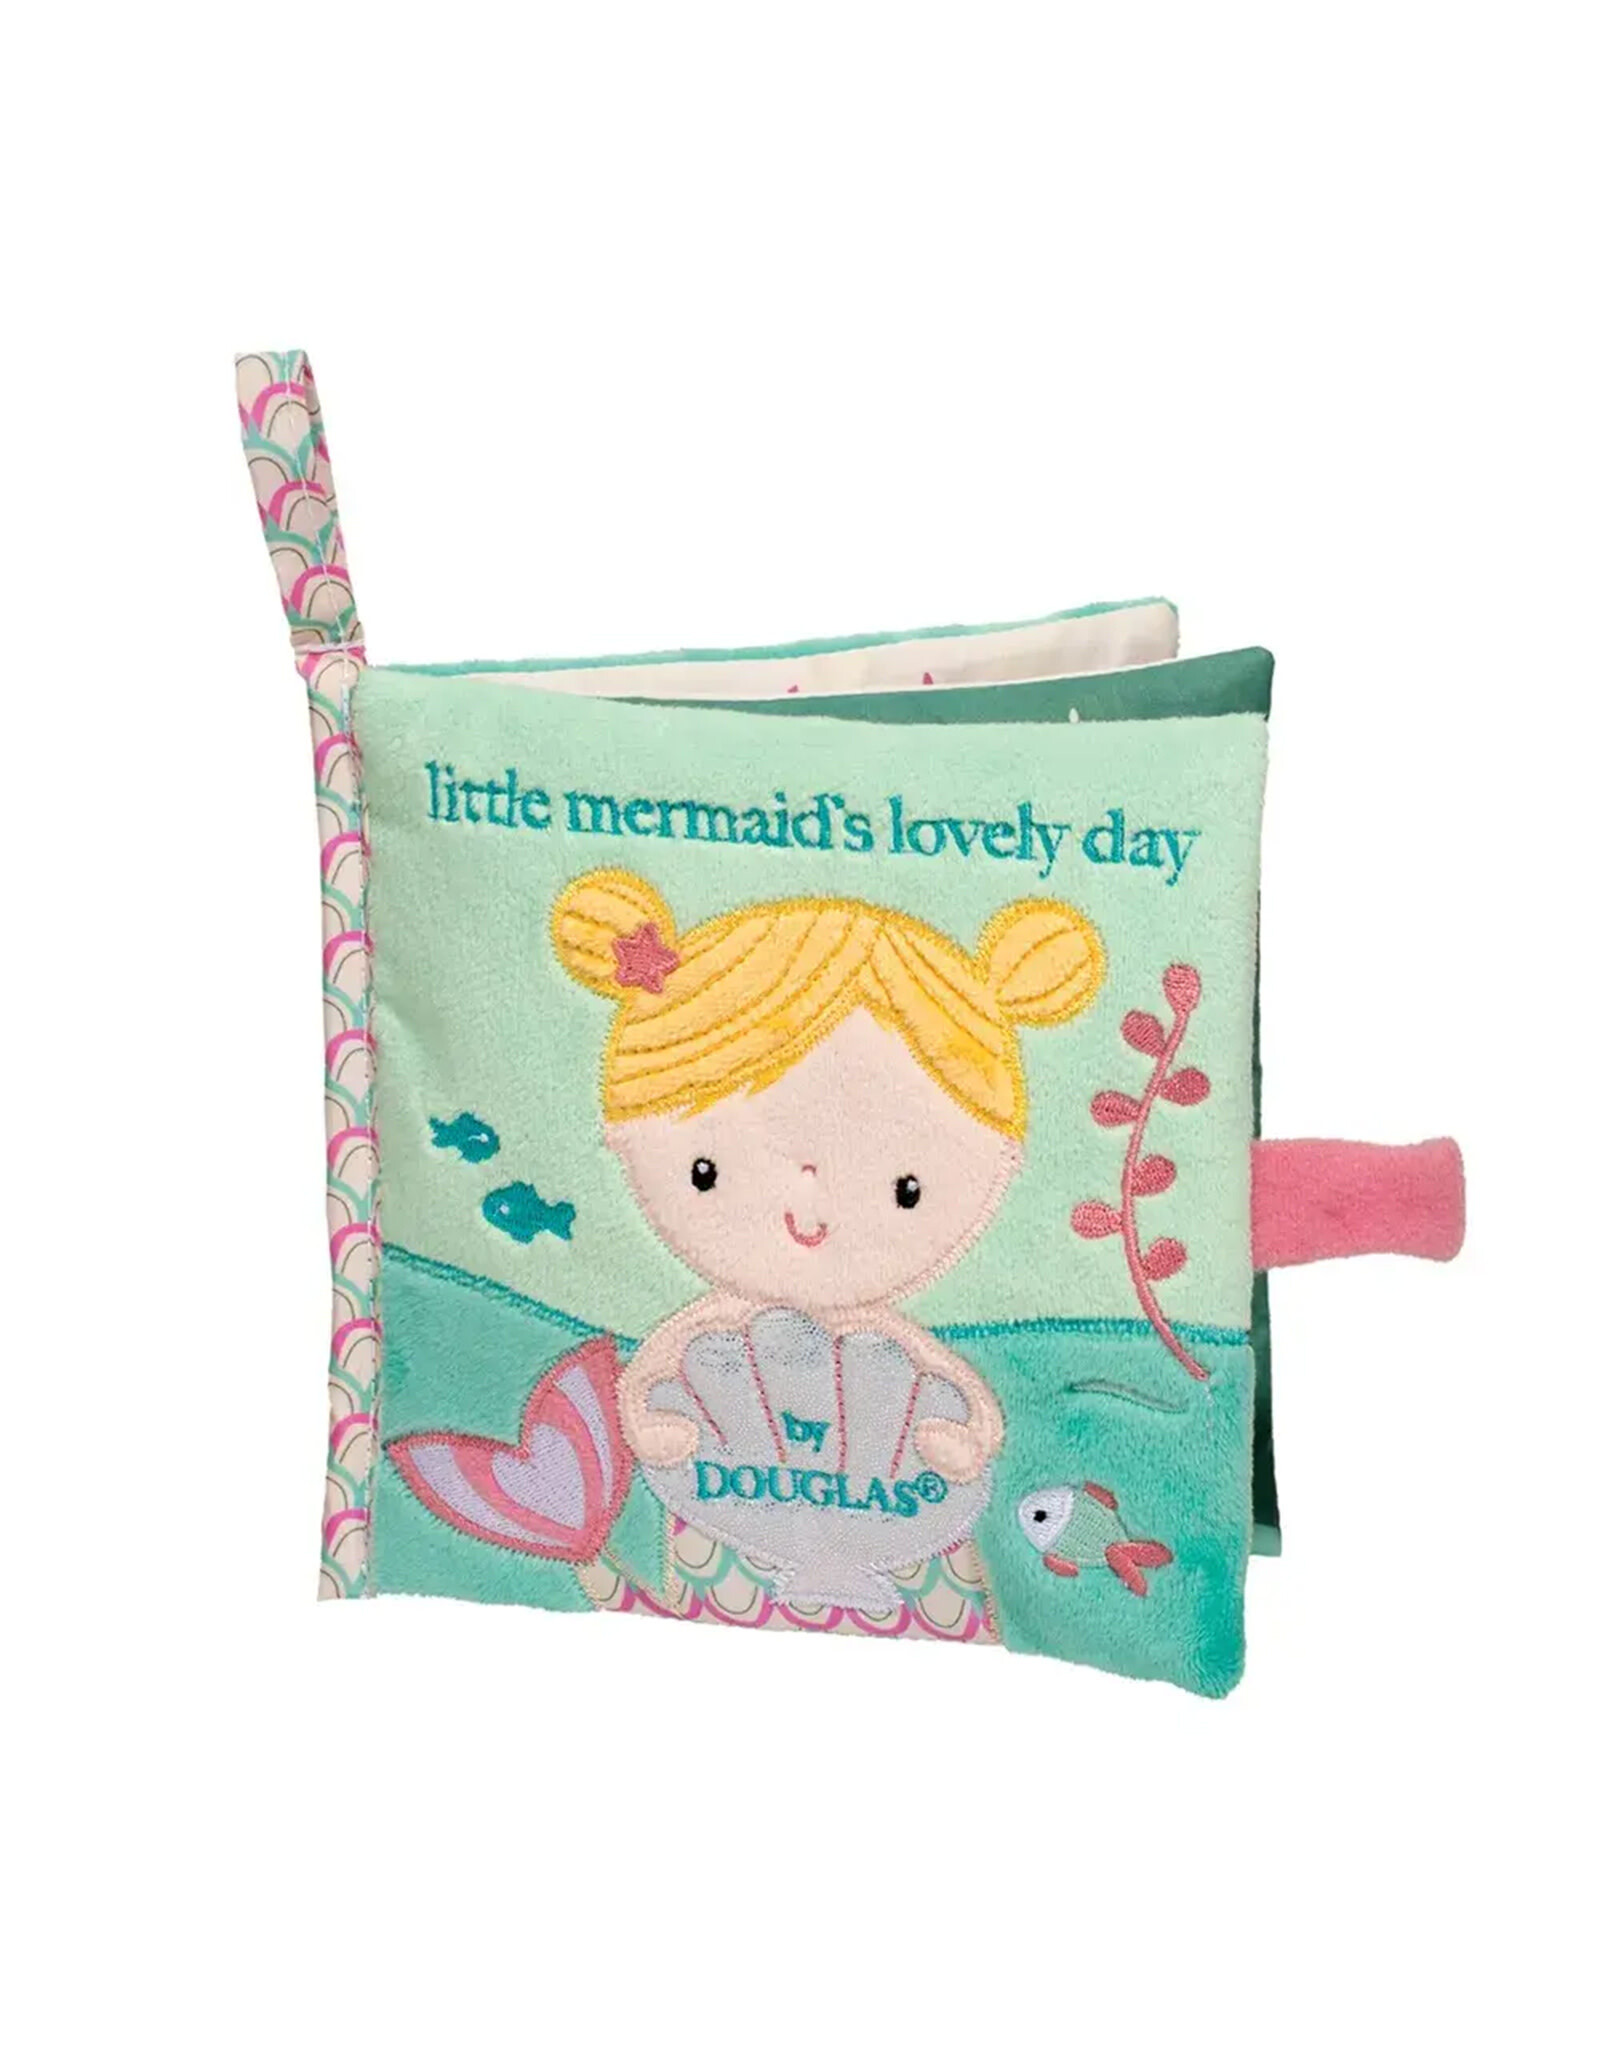 Douglas Douglas Cuddle Toys Little Mermaid's Lovely Day Activity Book